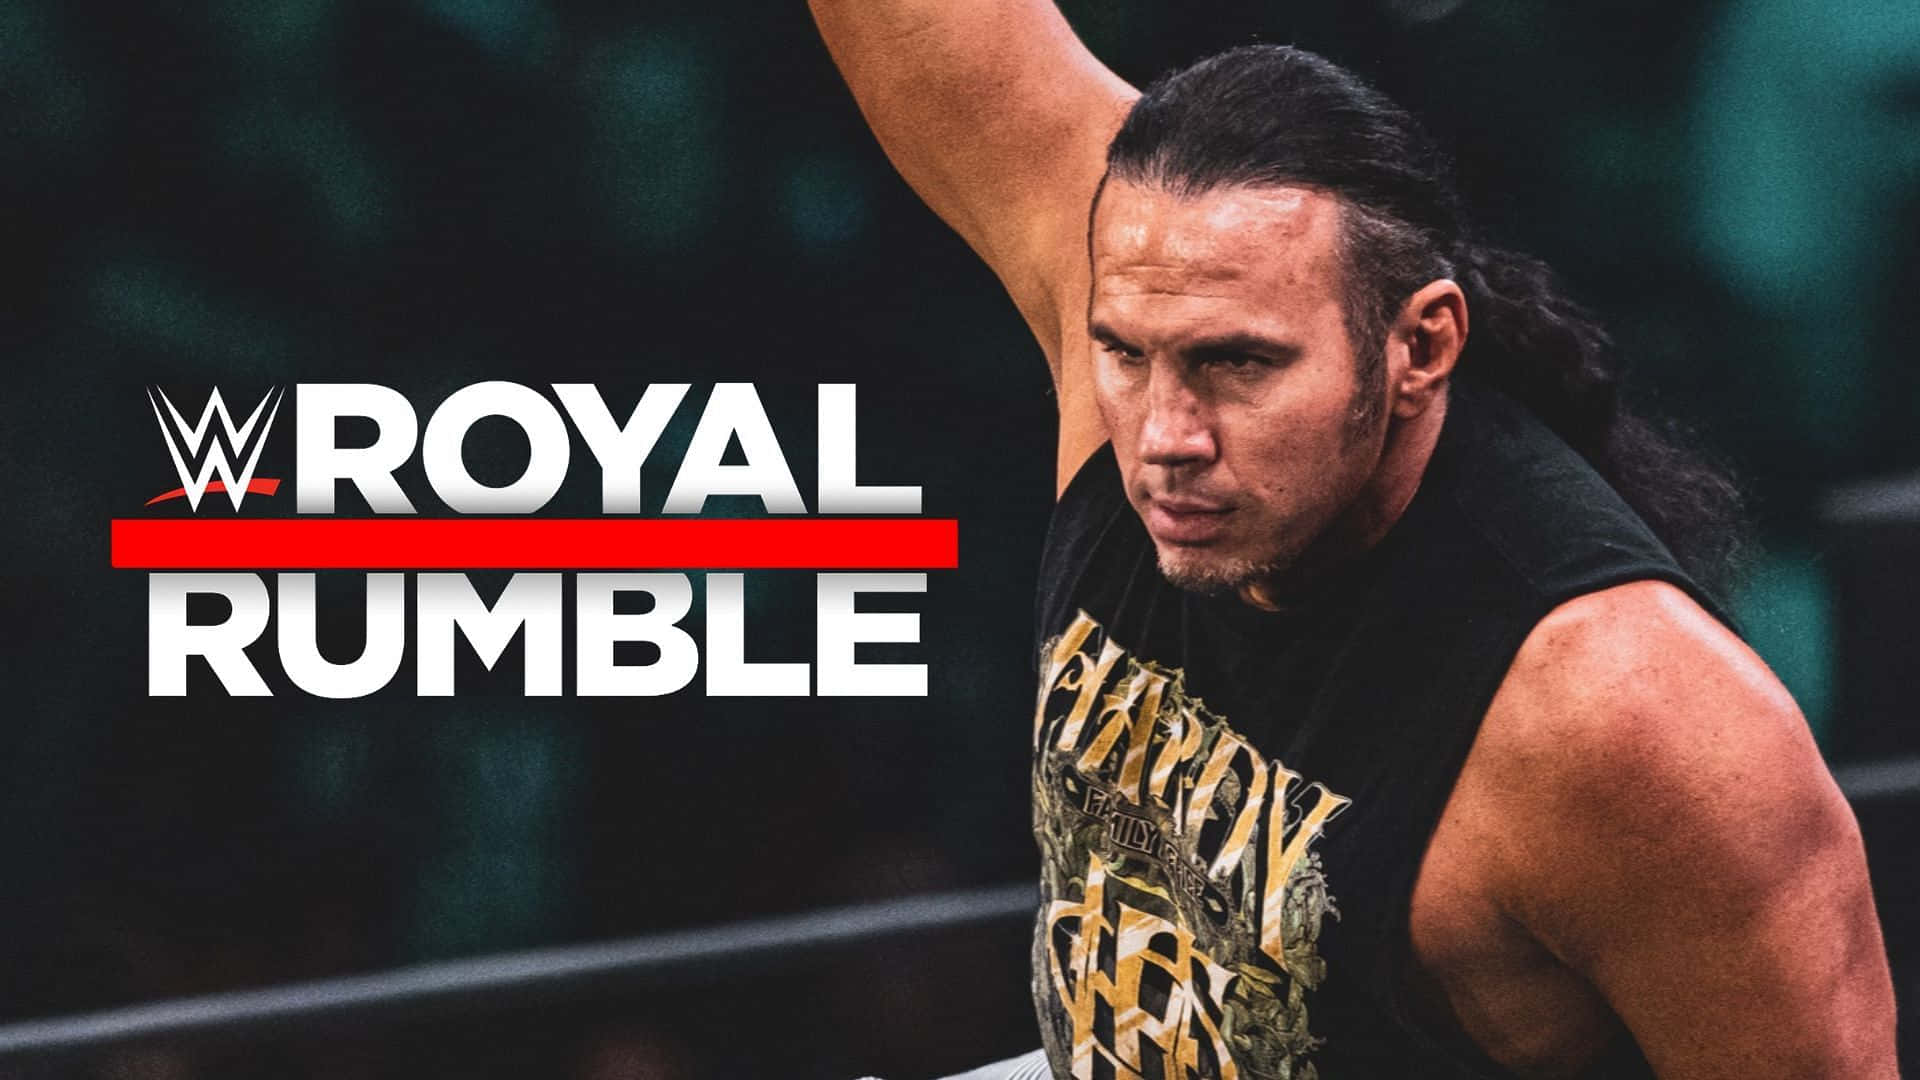 Wwe American Wrestler Matt Hardy Royal Rumble Background